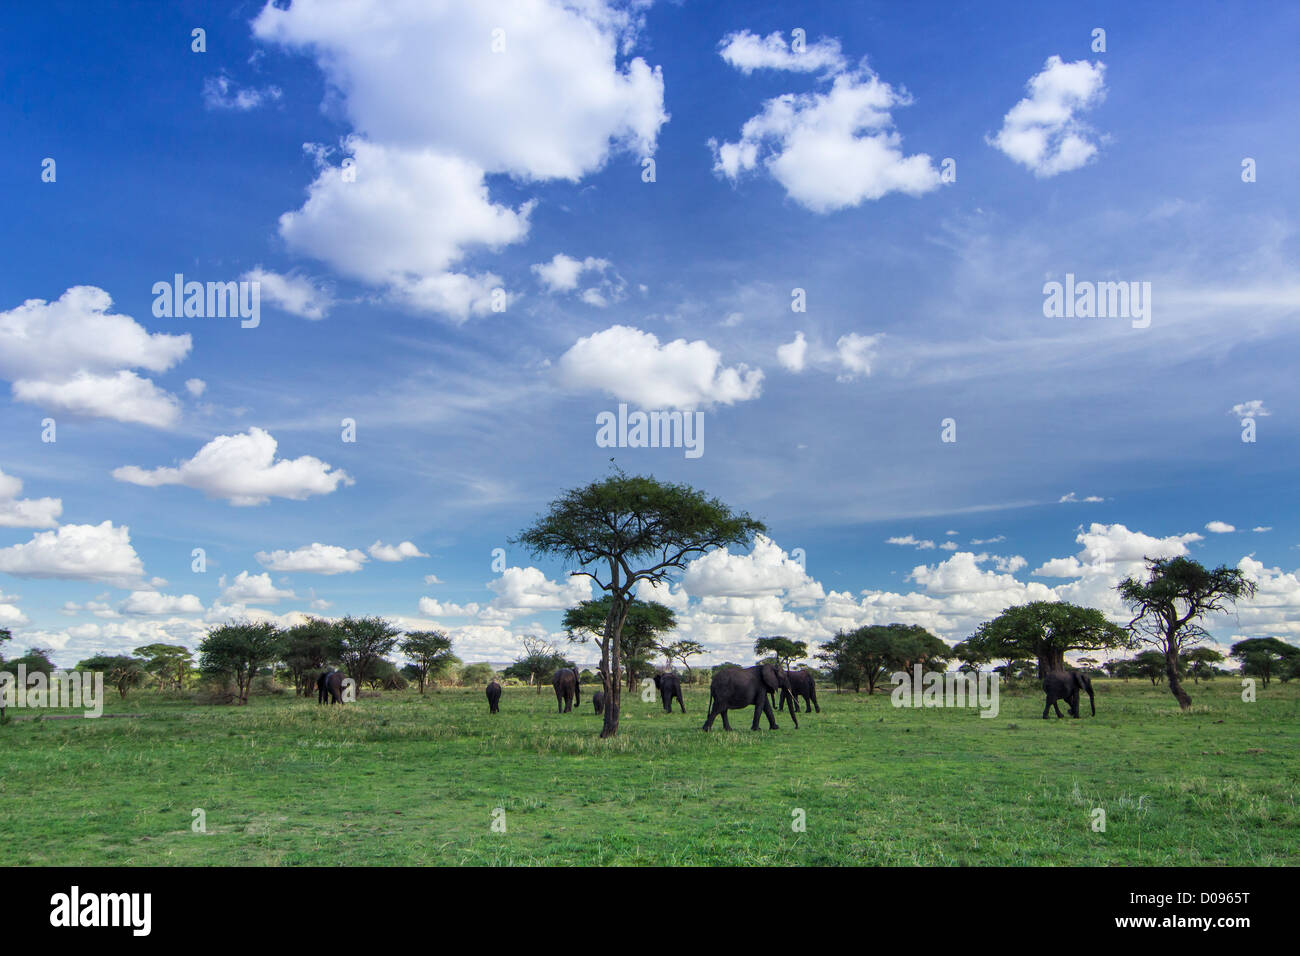 Elephant, Tarangire National Park, Tanzania, Africa Stock Photo